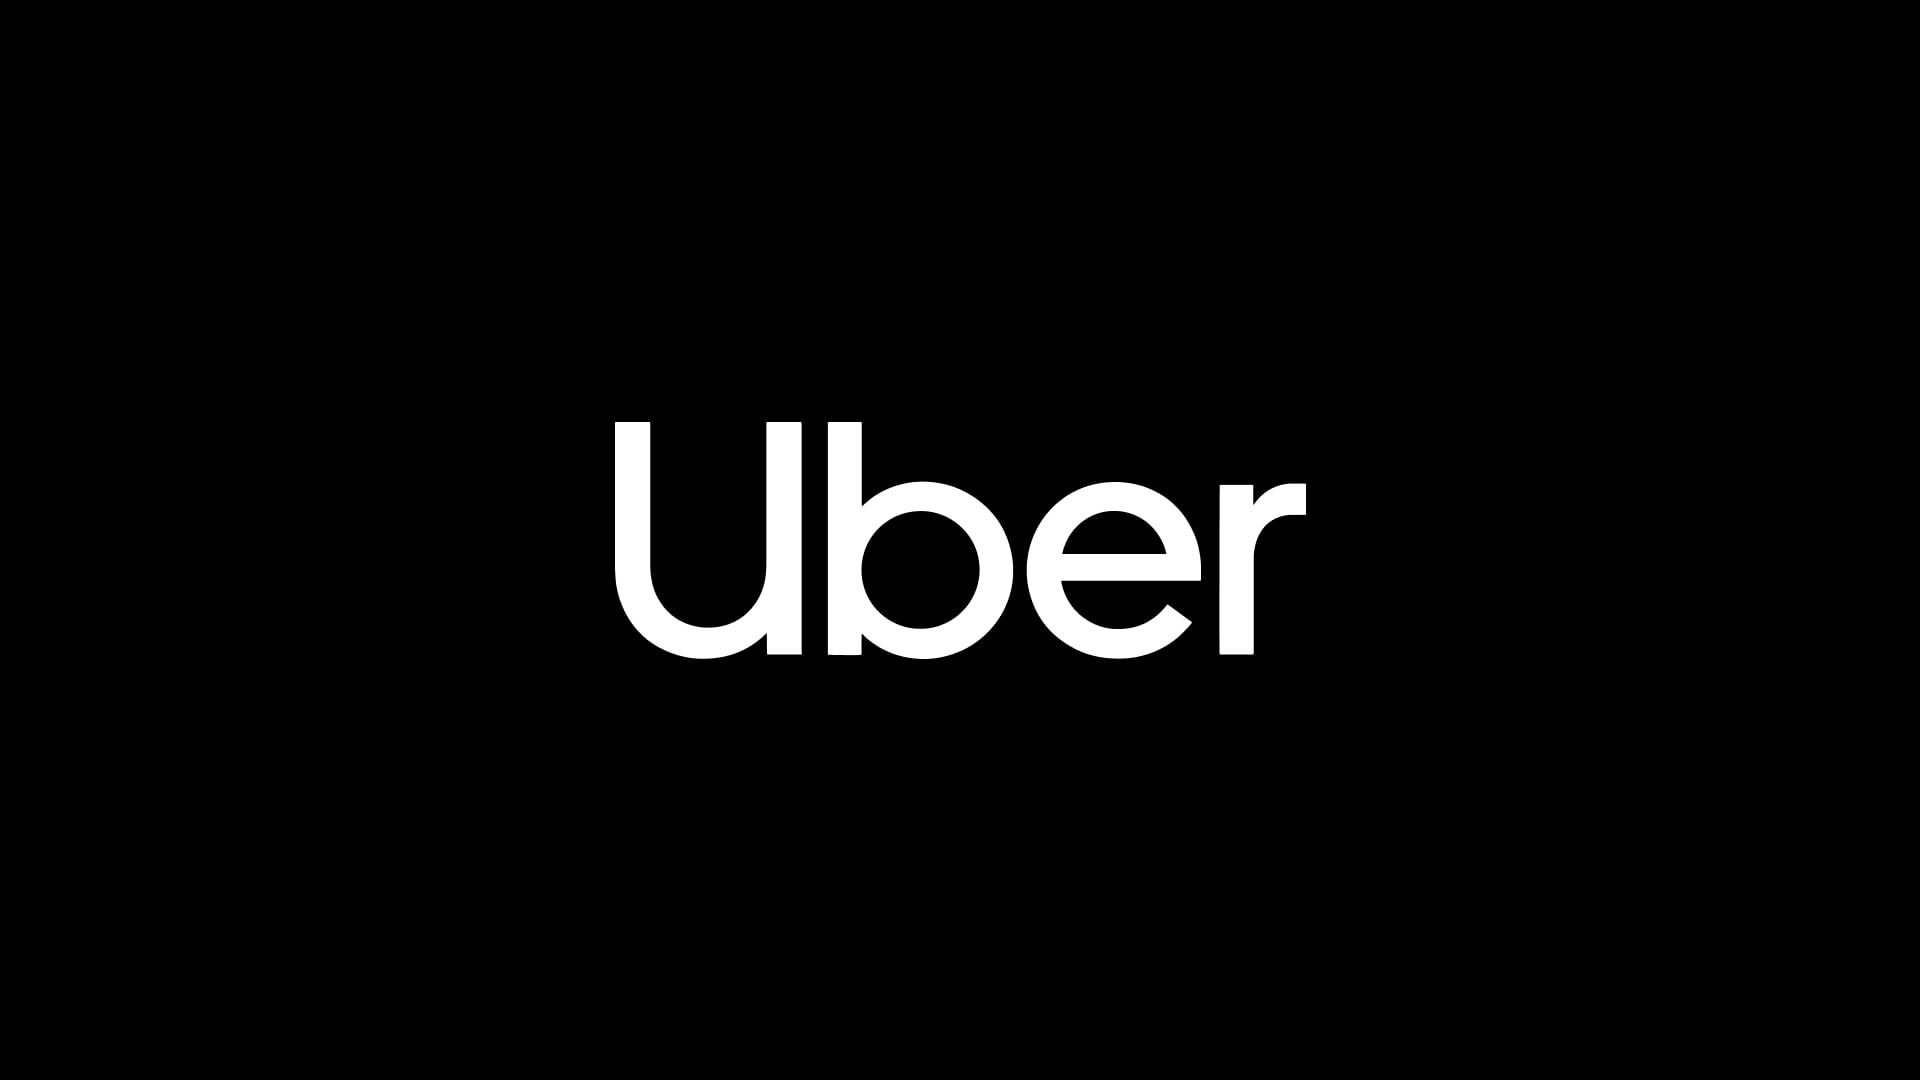 Figma Customer Testimonial Video with Uber